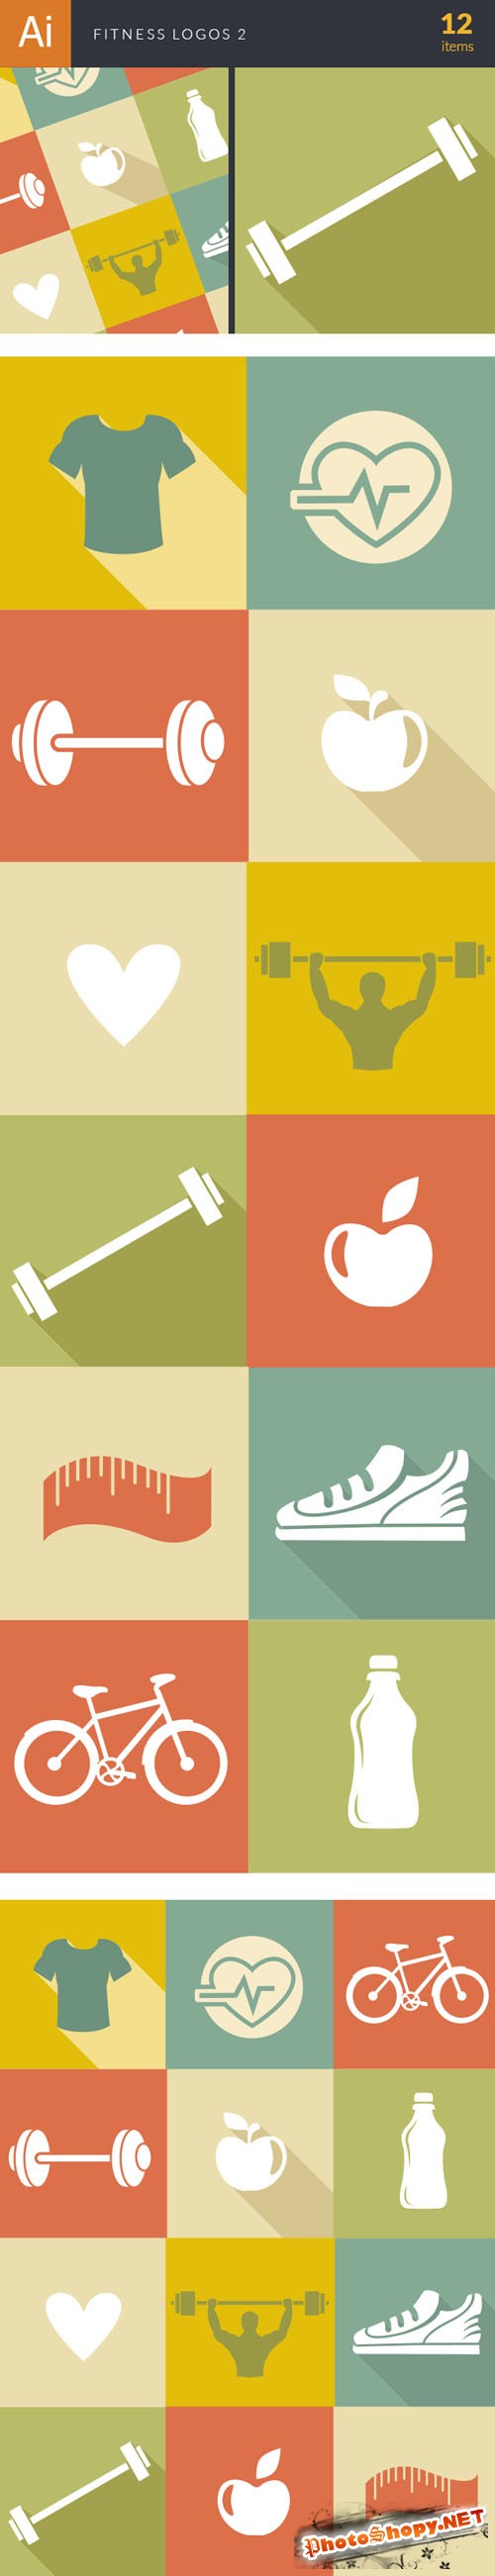 Fitness Logos Vector Illustrations Pack 2